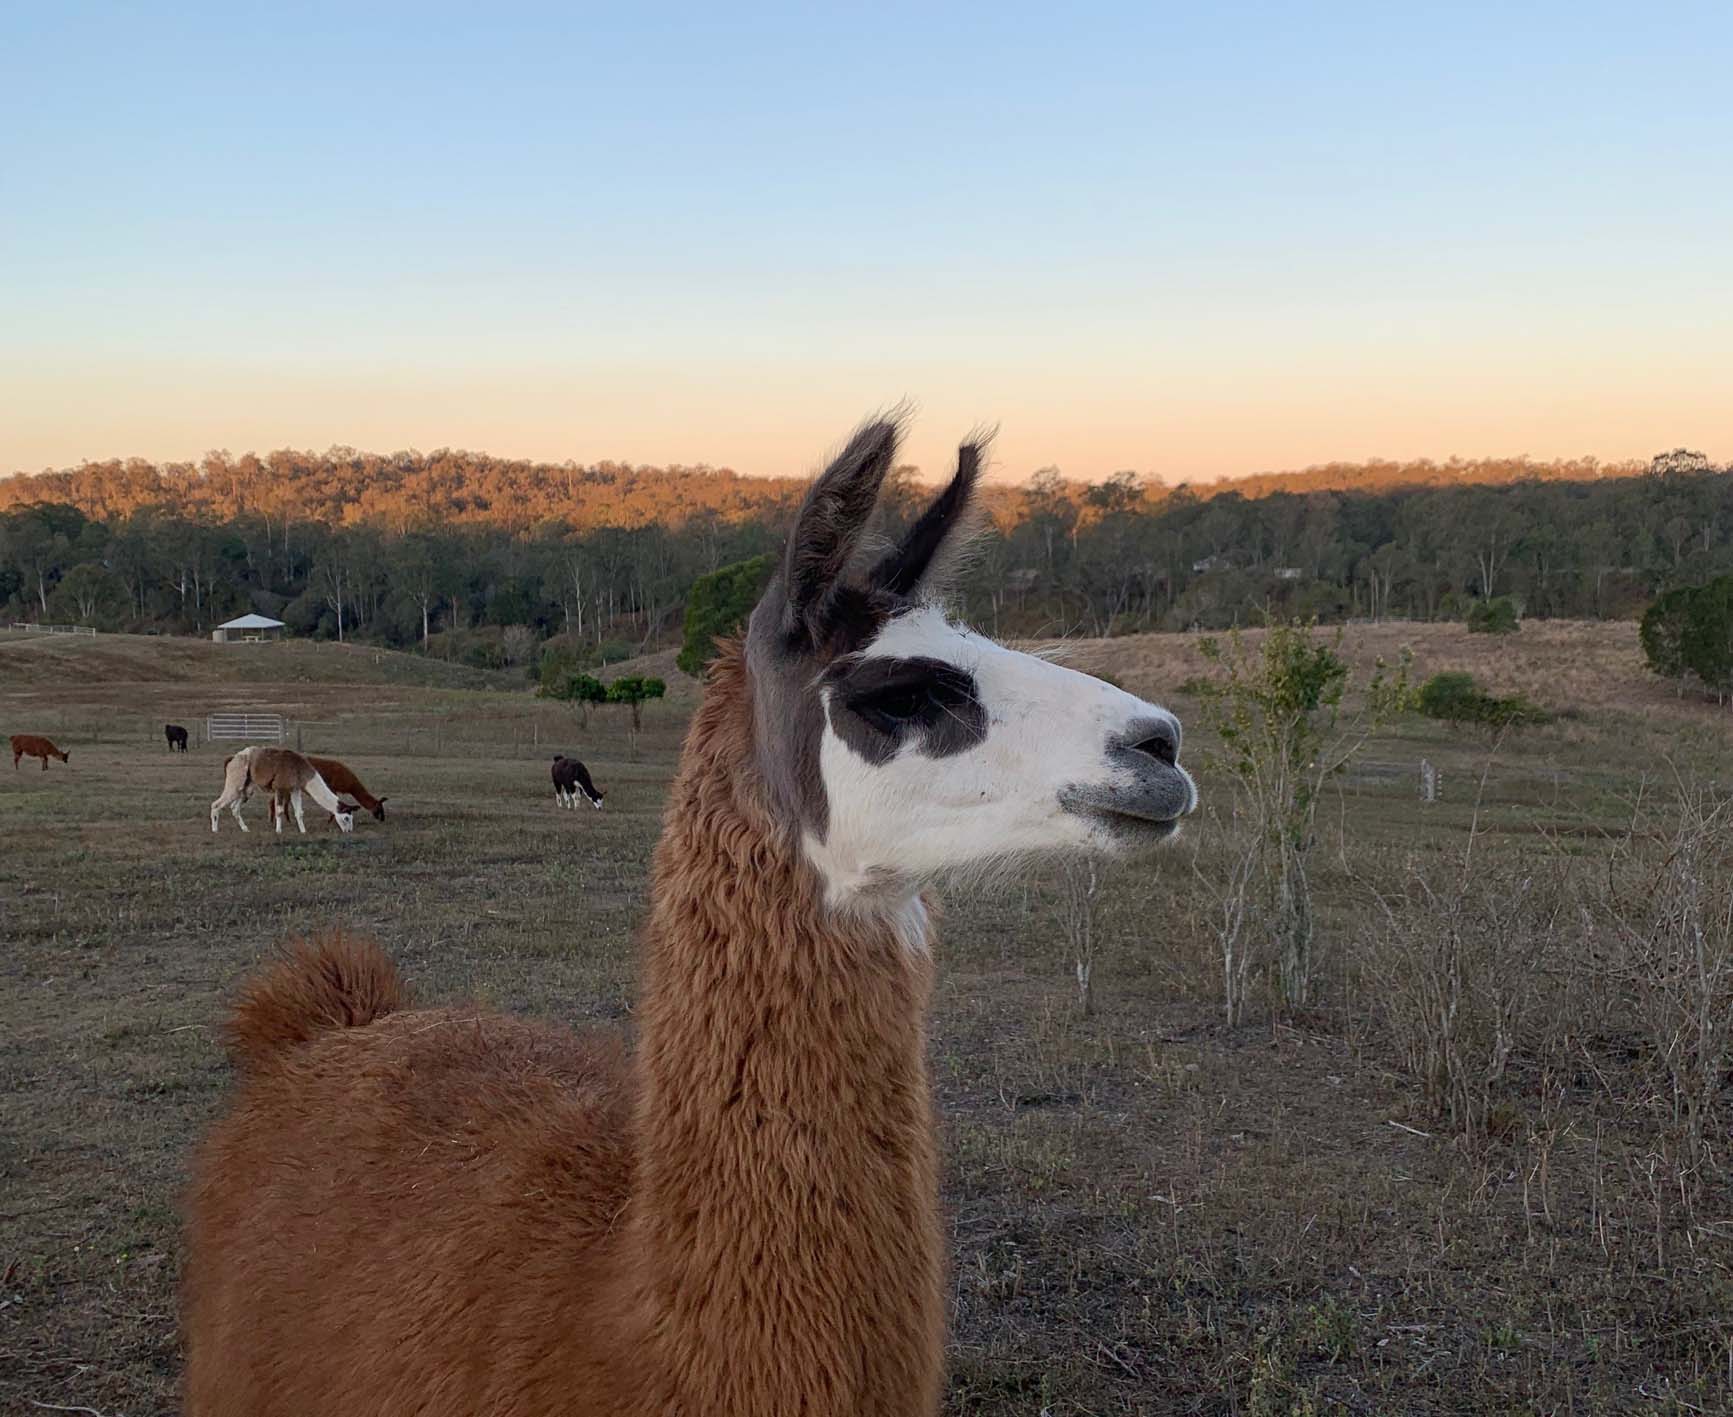 Sunset at the Llama Farm